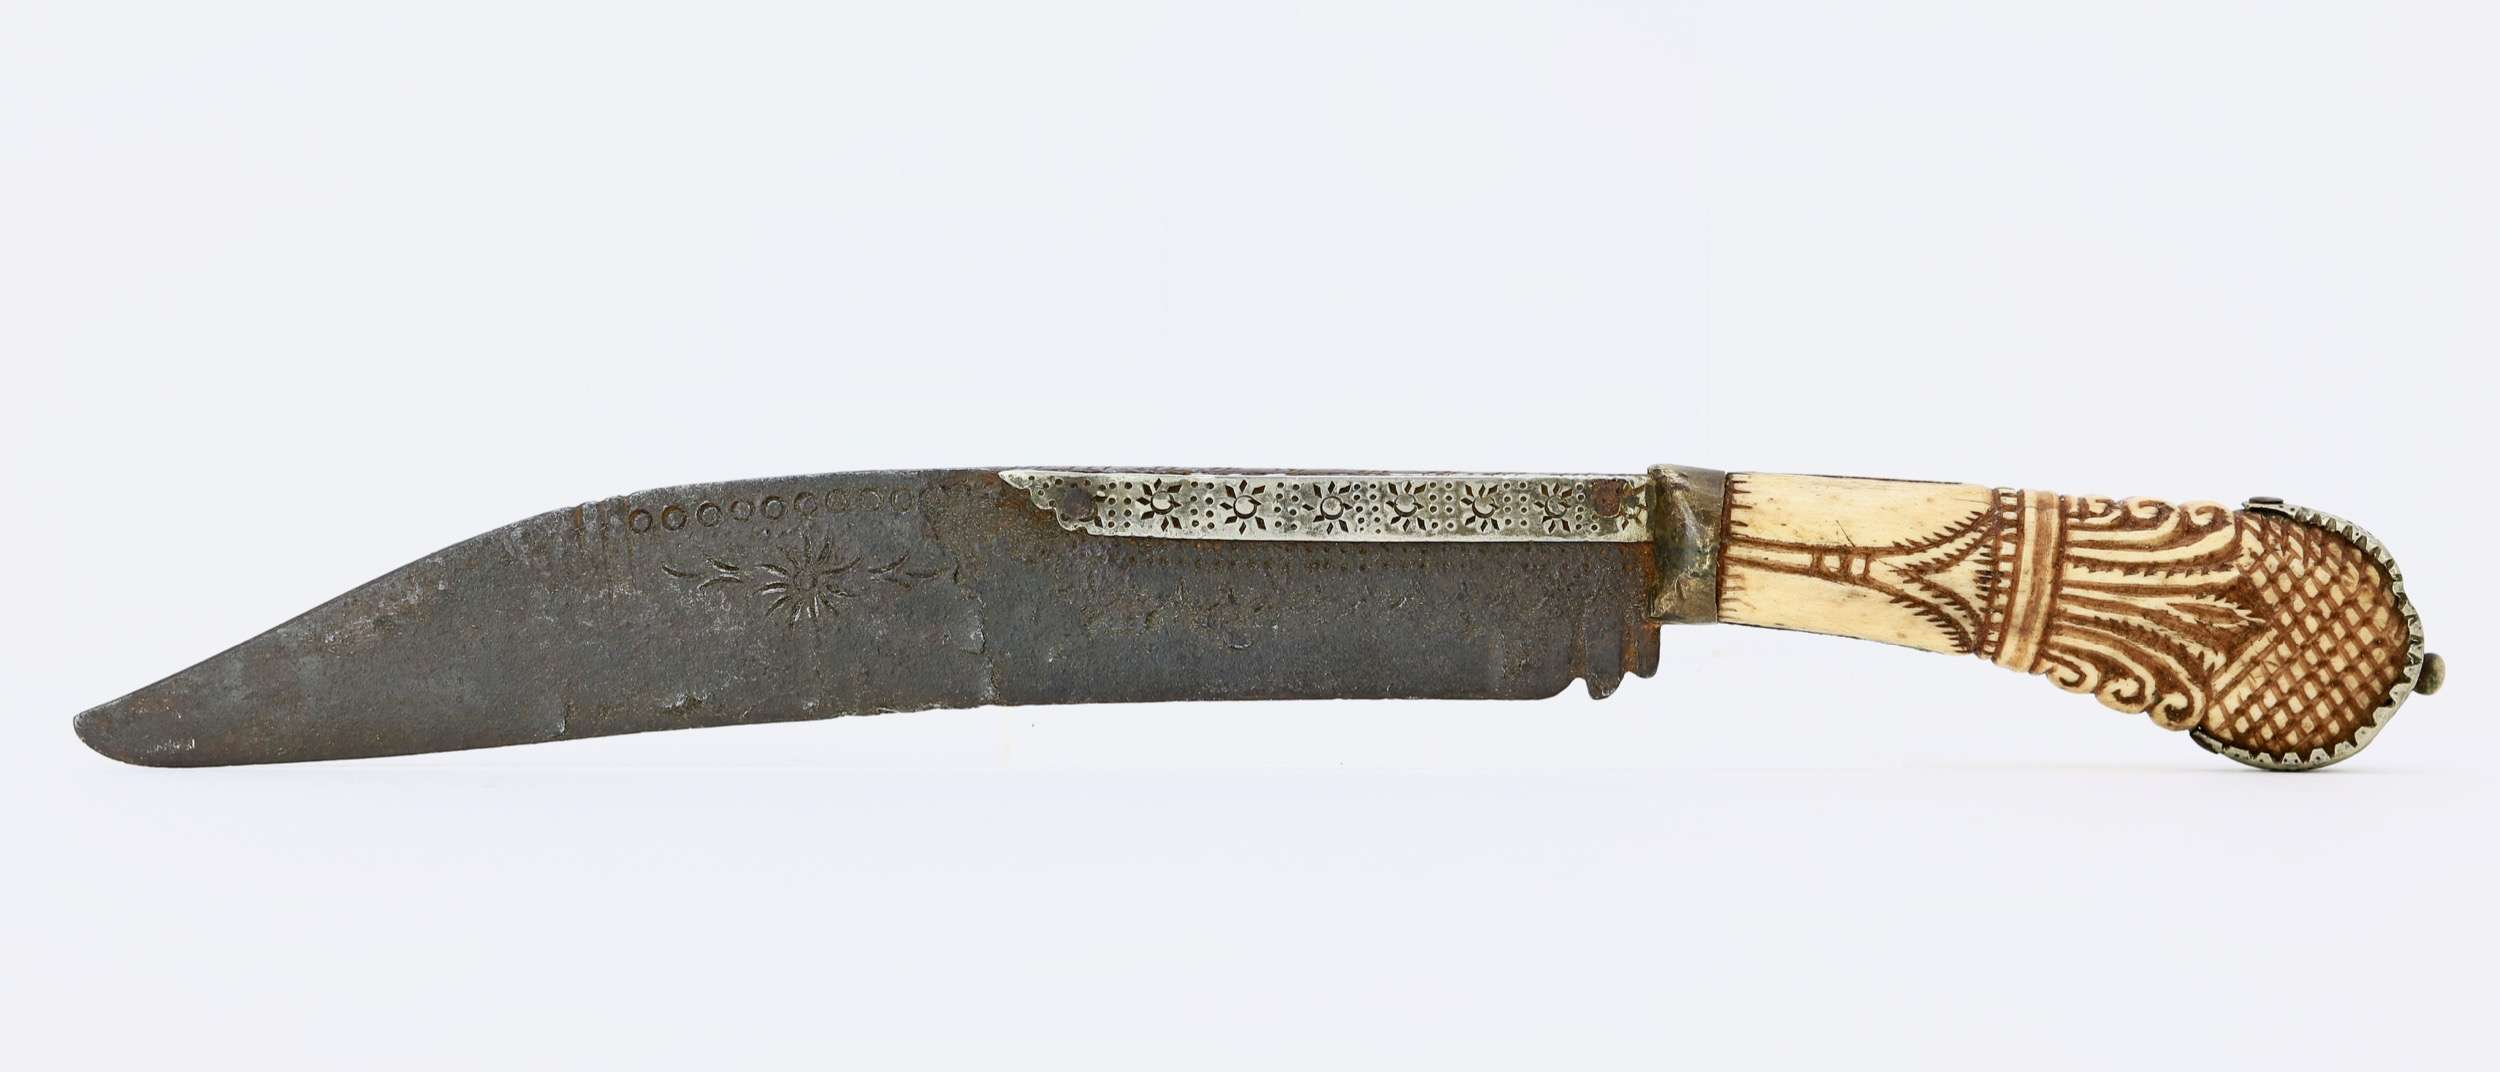 Sinhalese knife